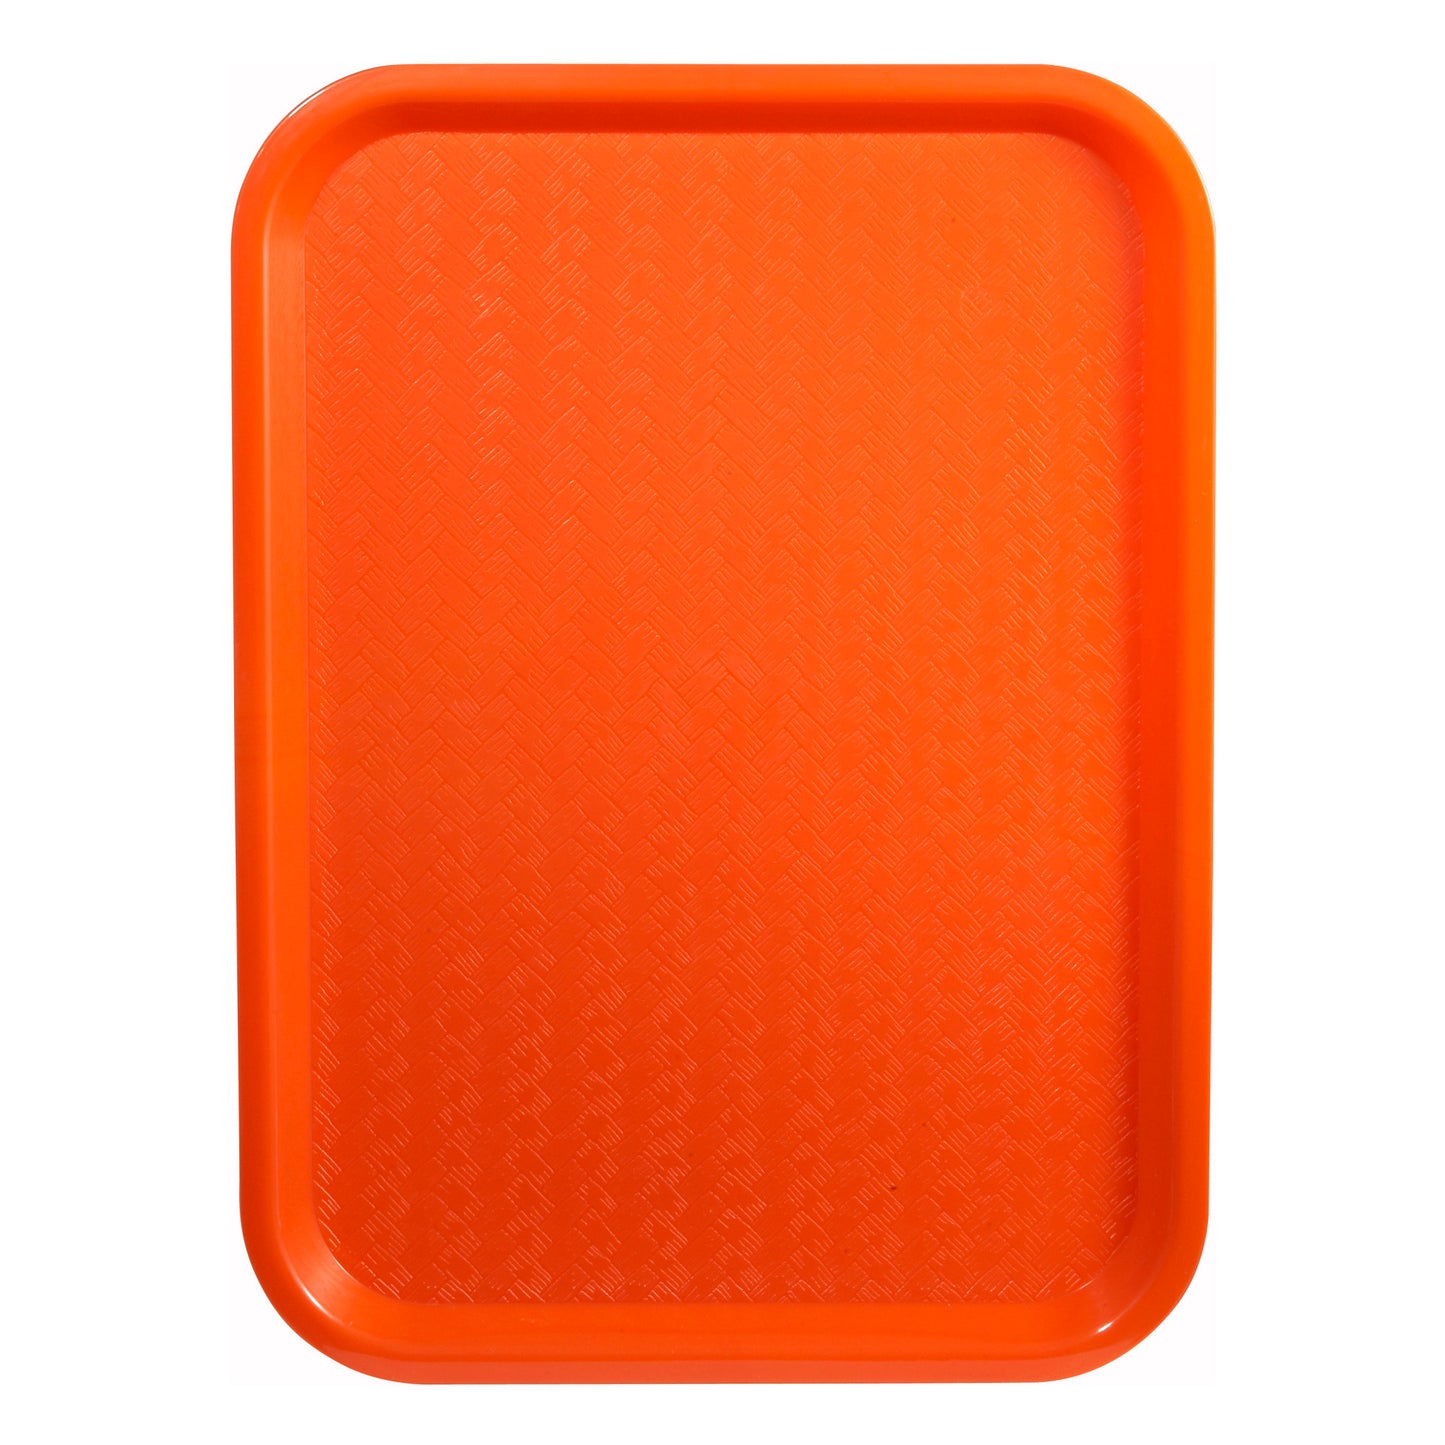 High Quality Plastic Cafeteria Tray - 12 x 16, Orange